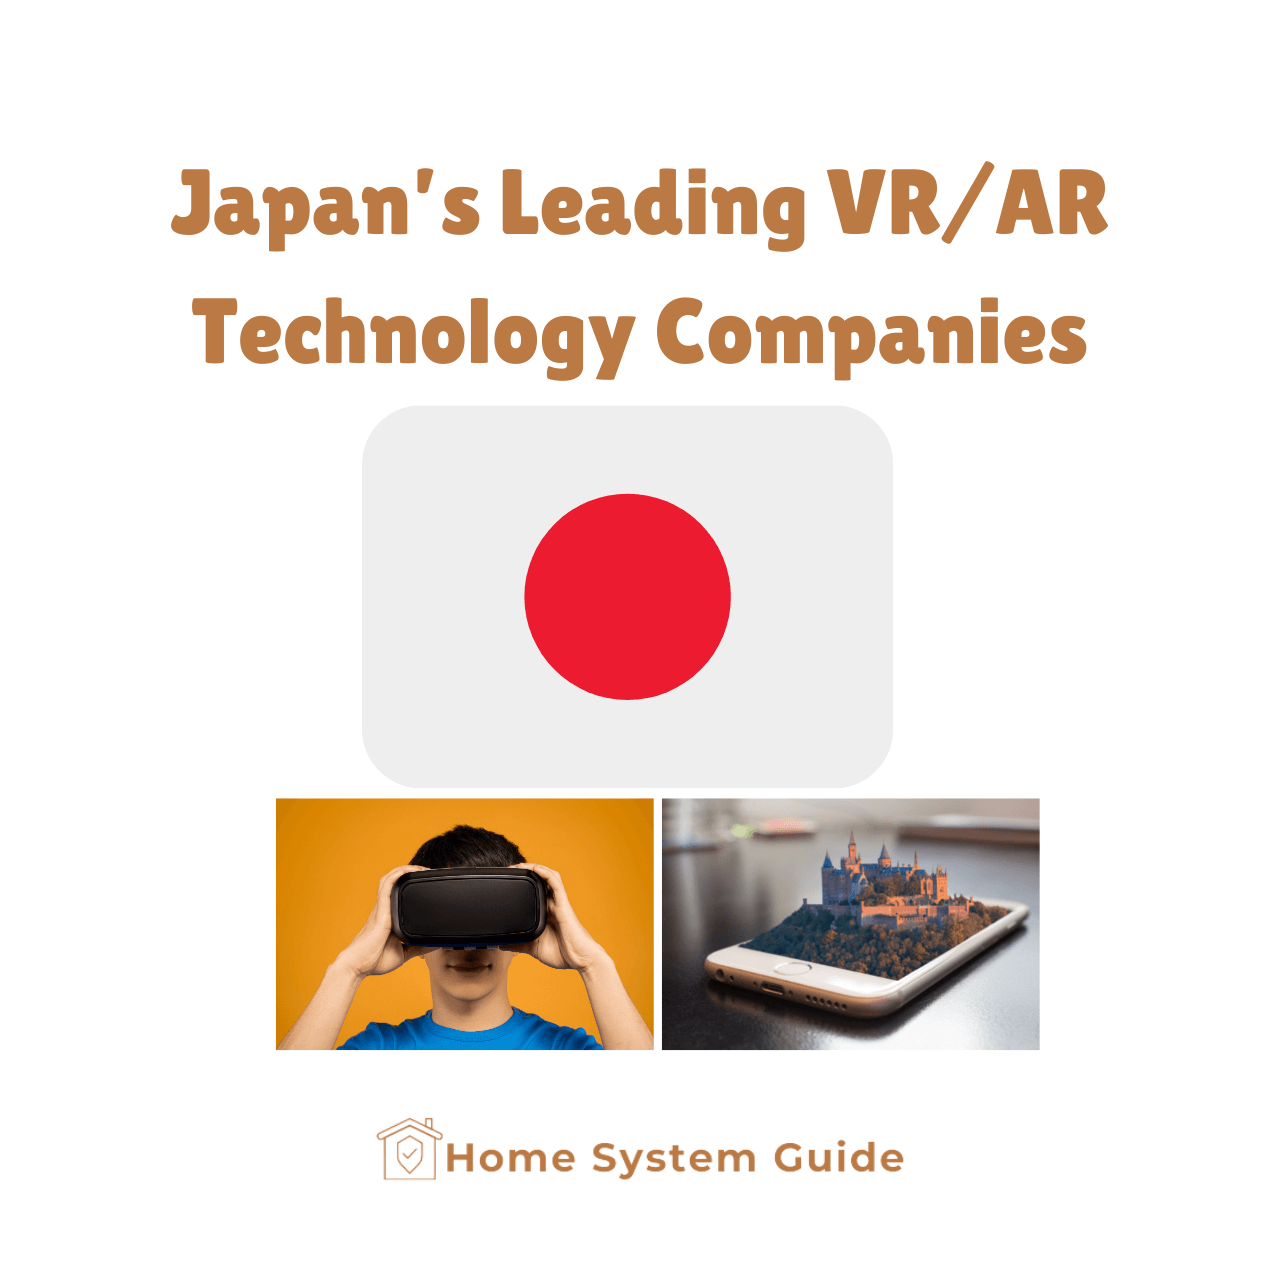 Japan’s Leading VRAR Technology Companies